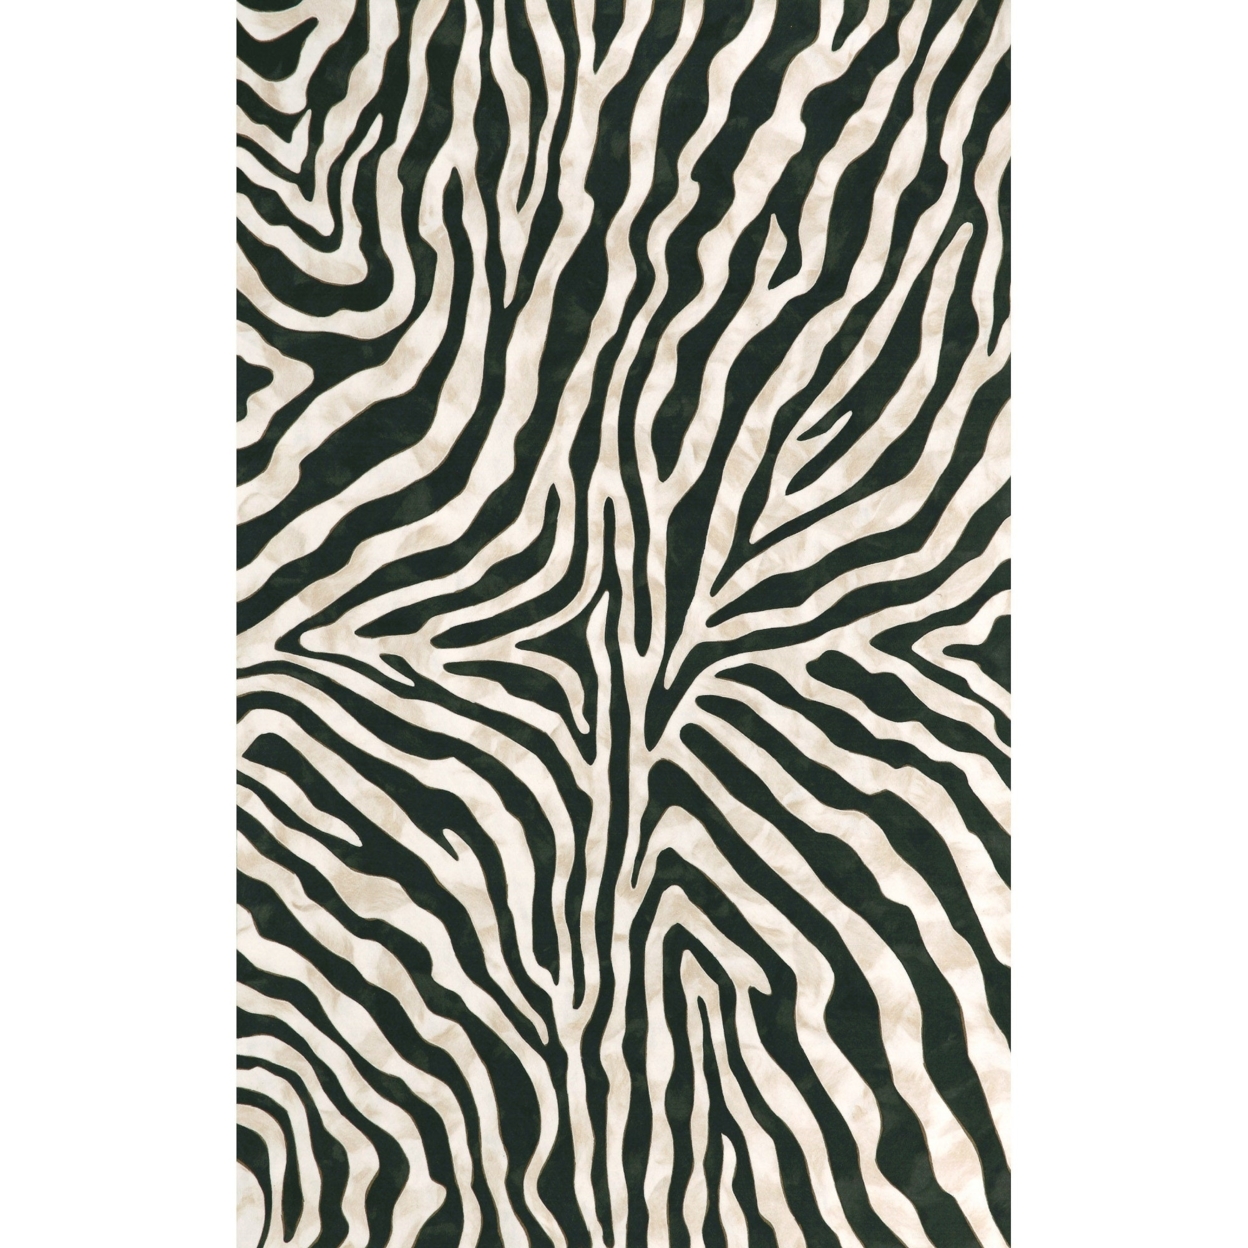 Liora Manne Visions I Zebra Indoor Outdoor Area Rug Black - 3'6 X 5'6